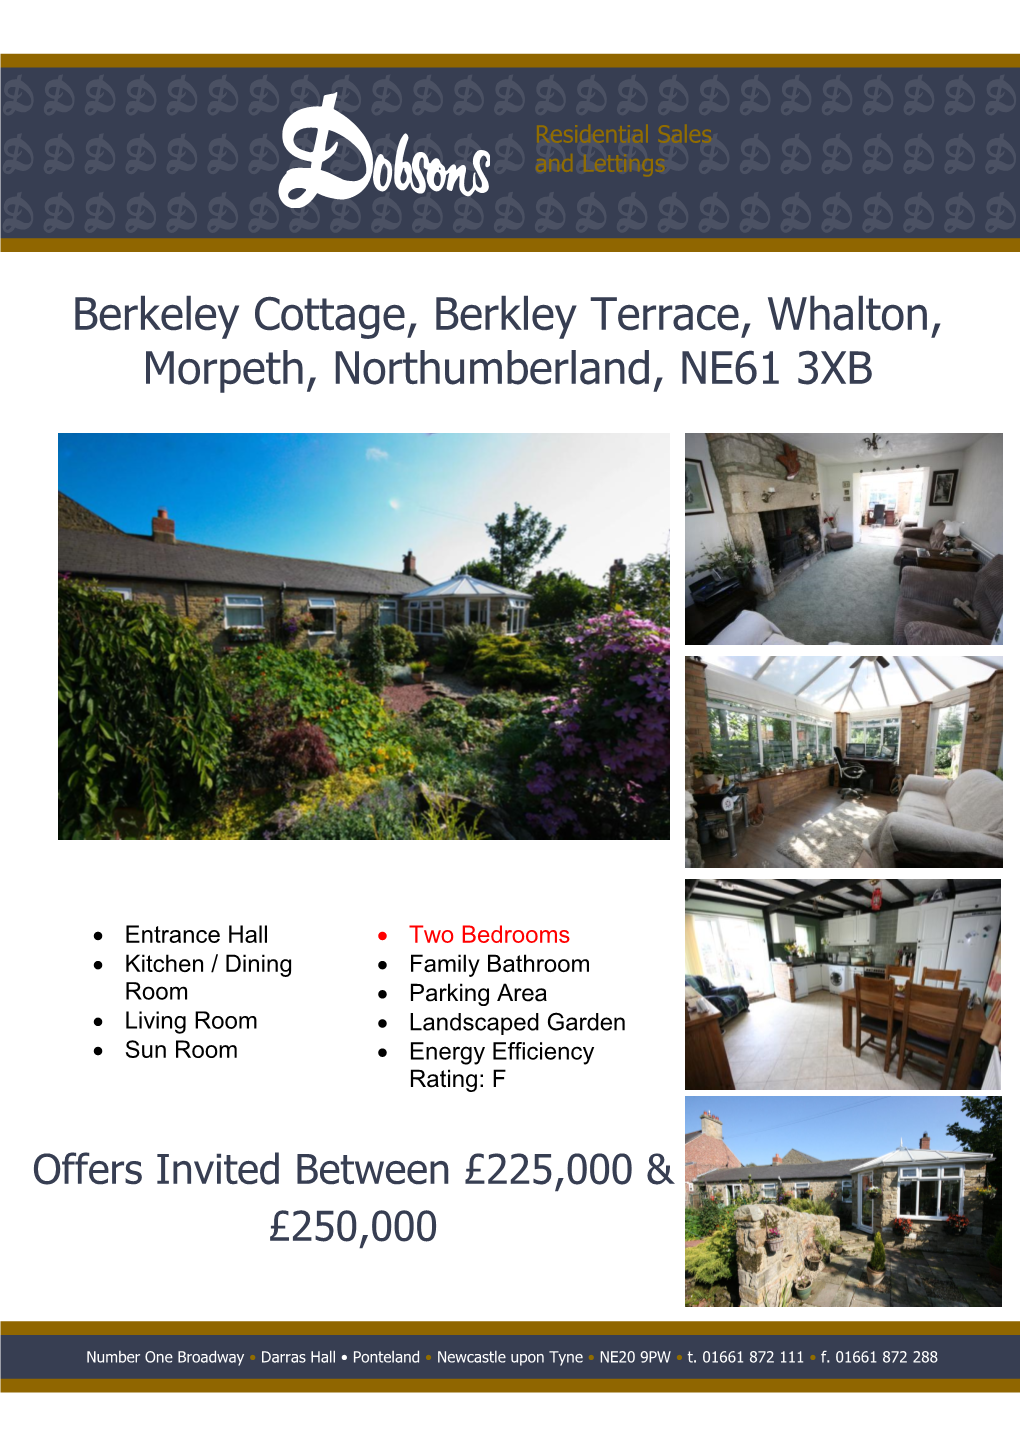 Berkeley Cottage, Berkley Terrace, Whalton, Morpeth, Northumberland, NE61 3XB